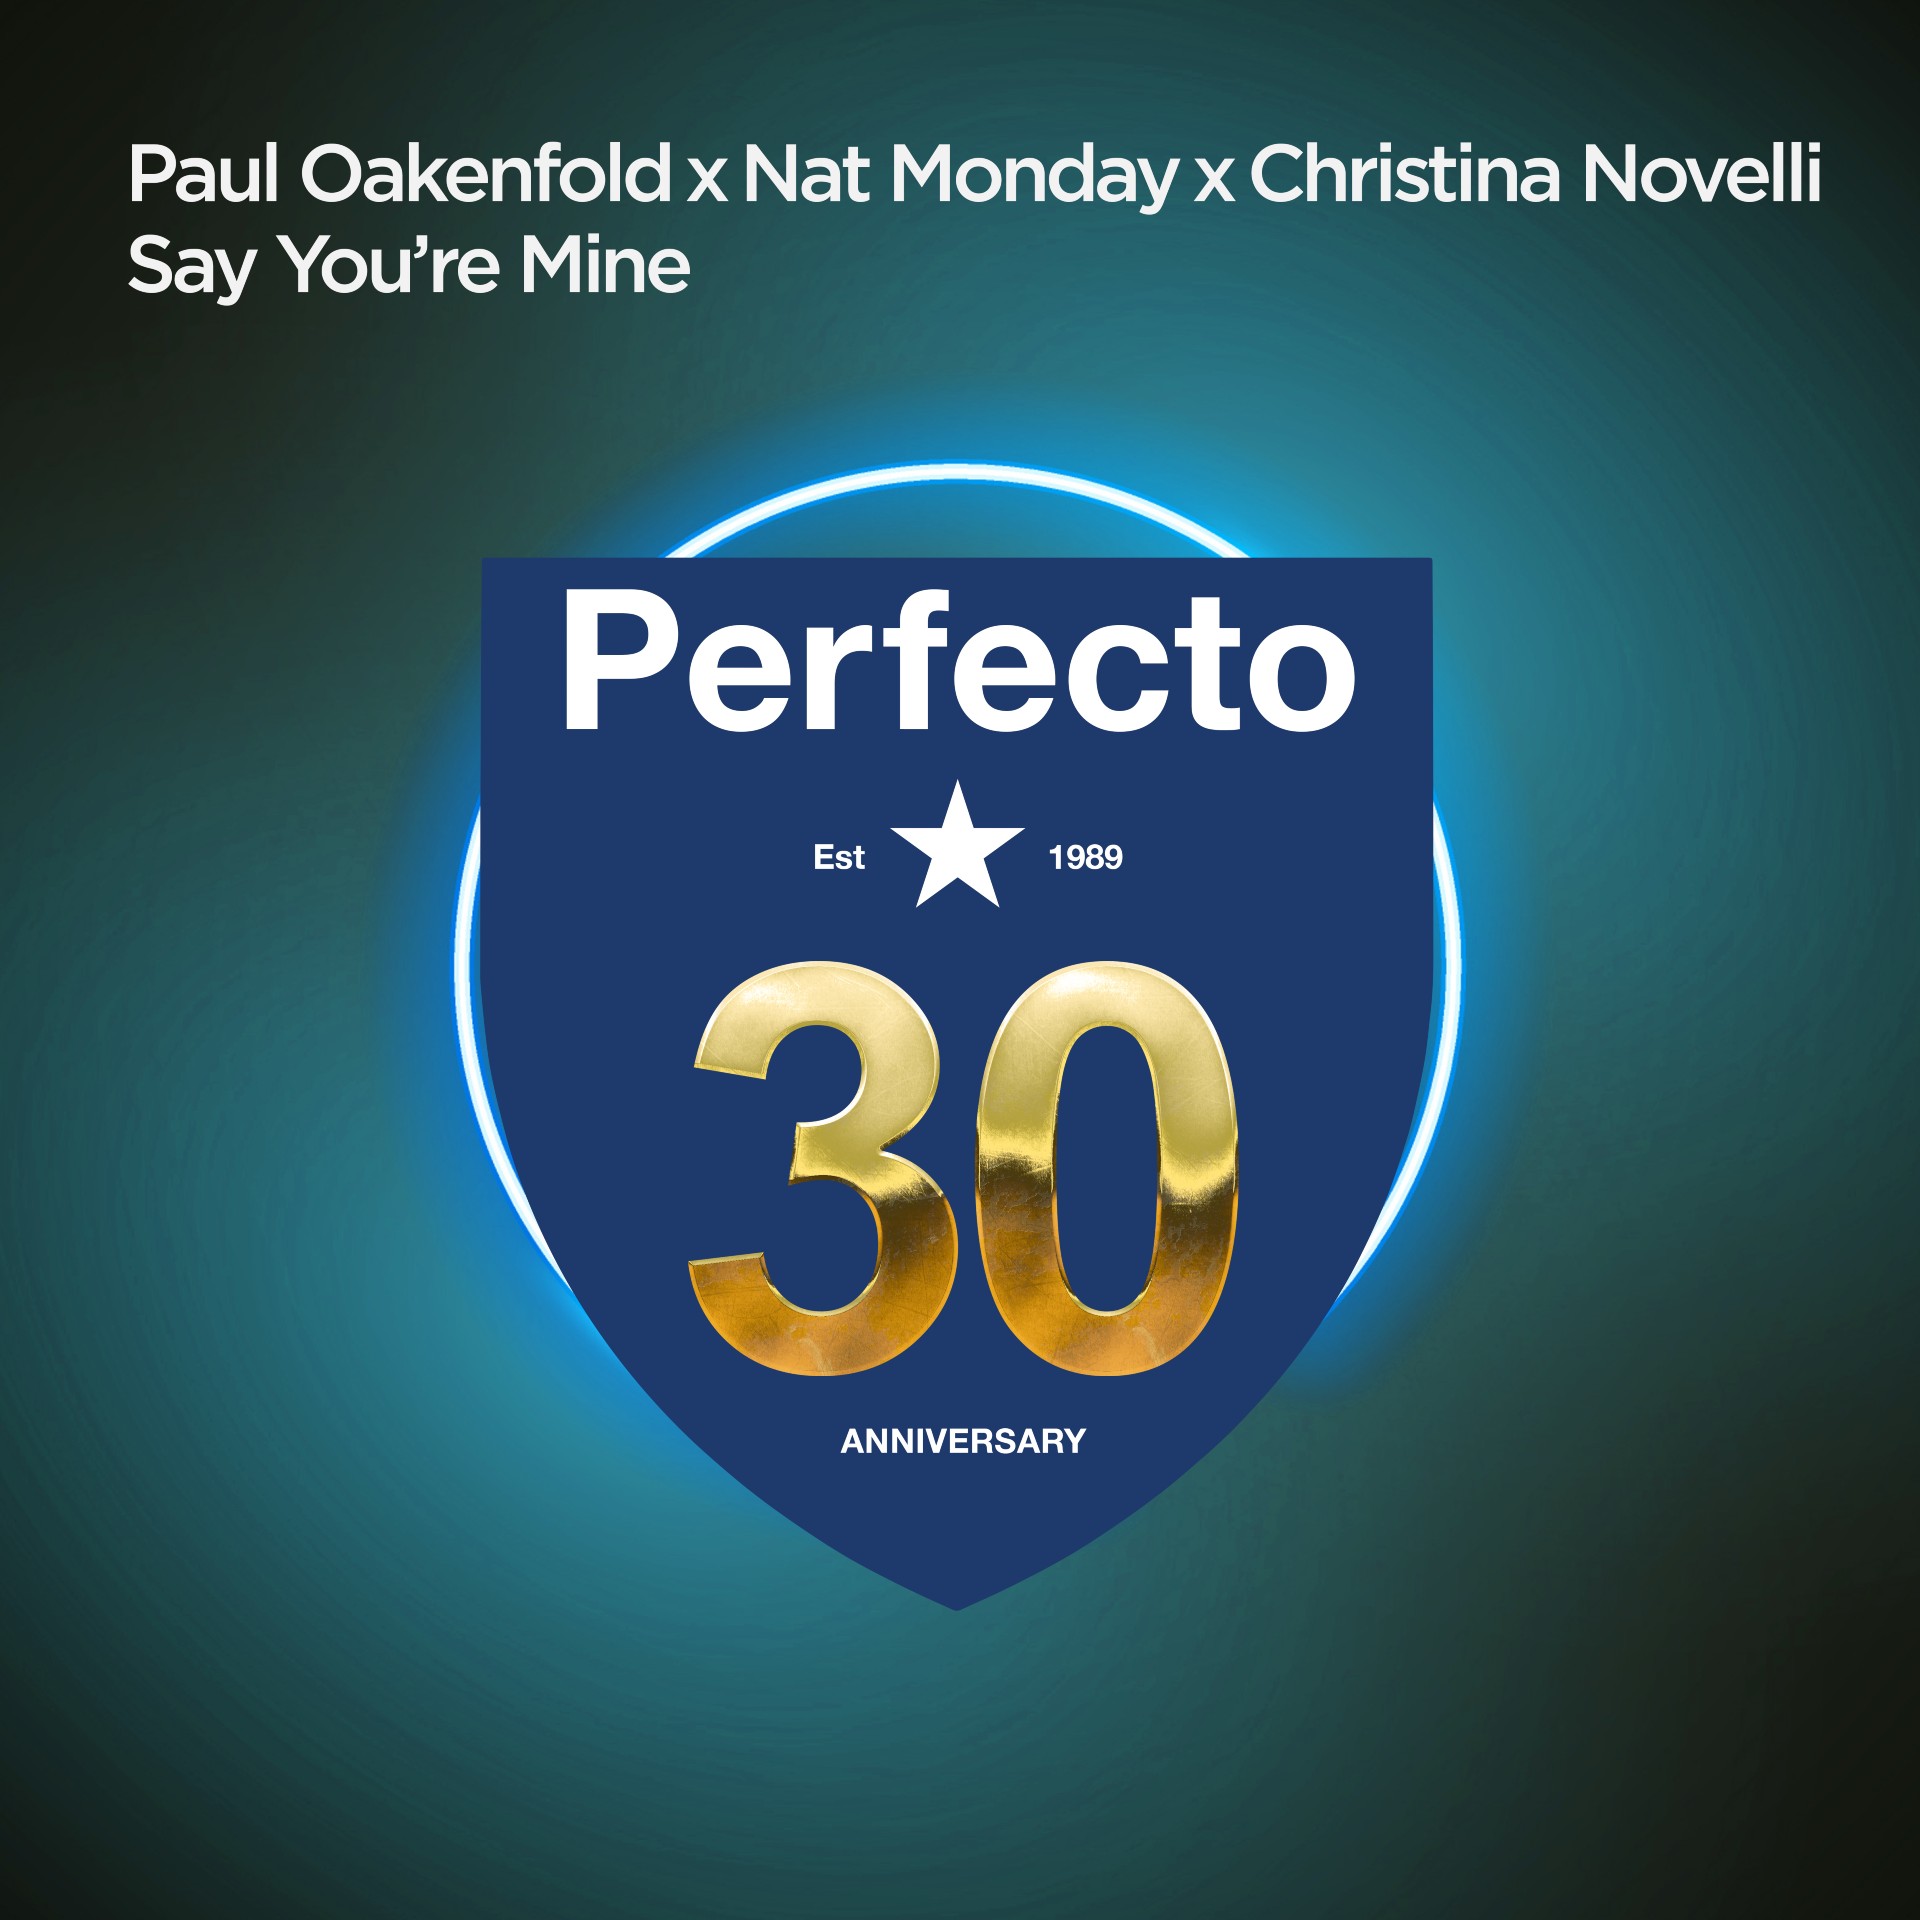 Paul Oakenfold x Nat Monday x Christina Novelli presents Say You're Mine on Perfecto Records